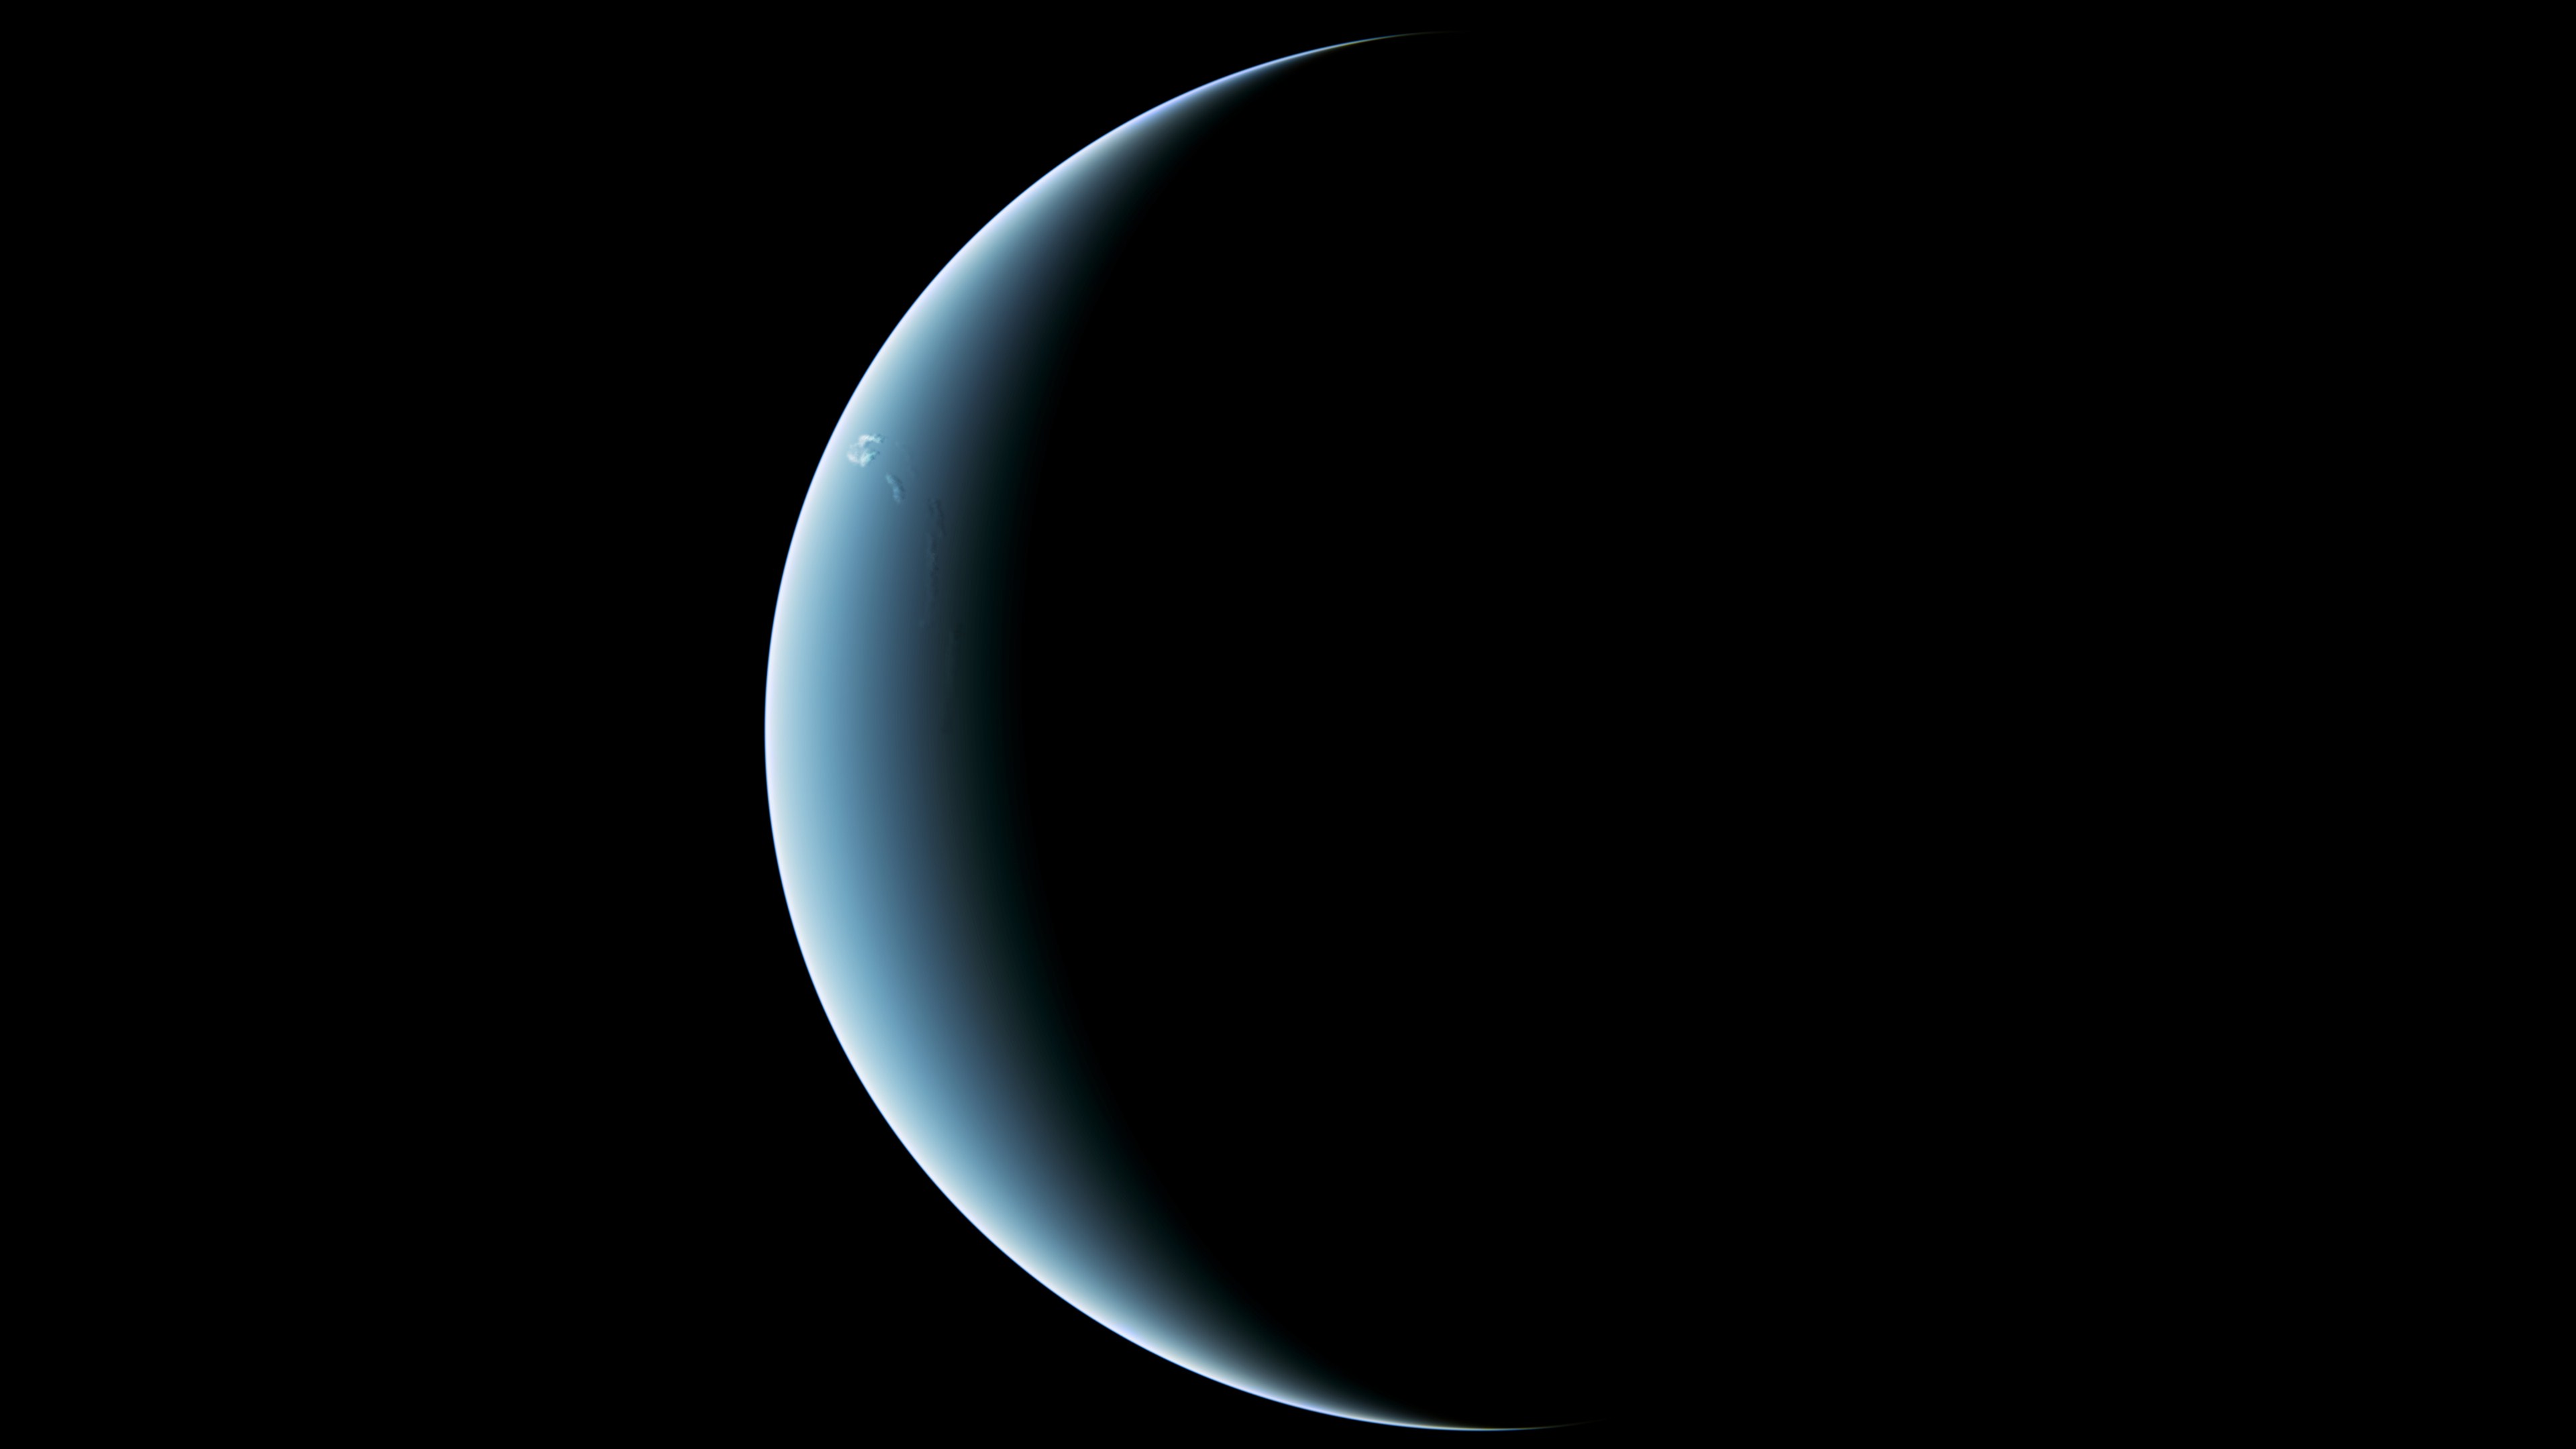 Neptune 4k Ultra HD Wallpaper Background Image Id